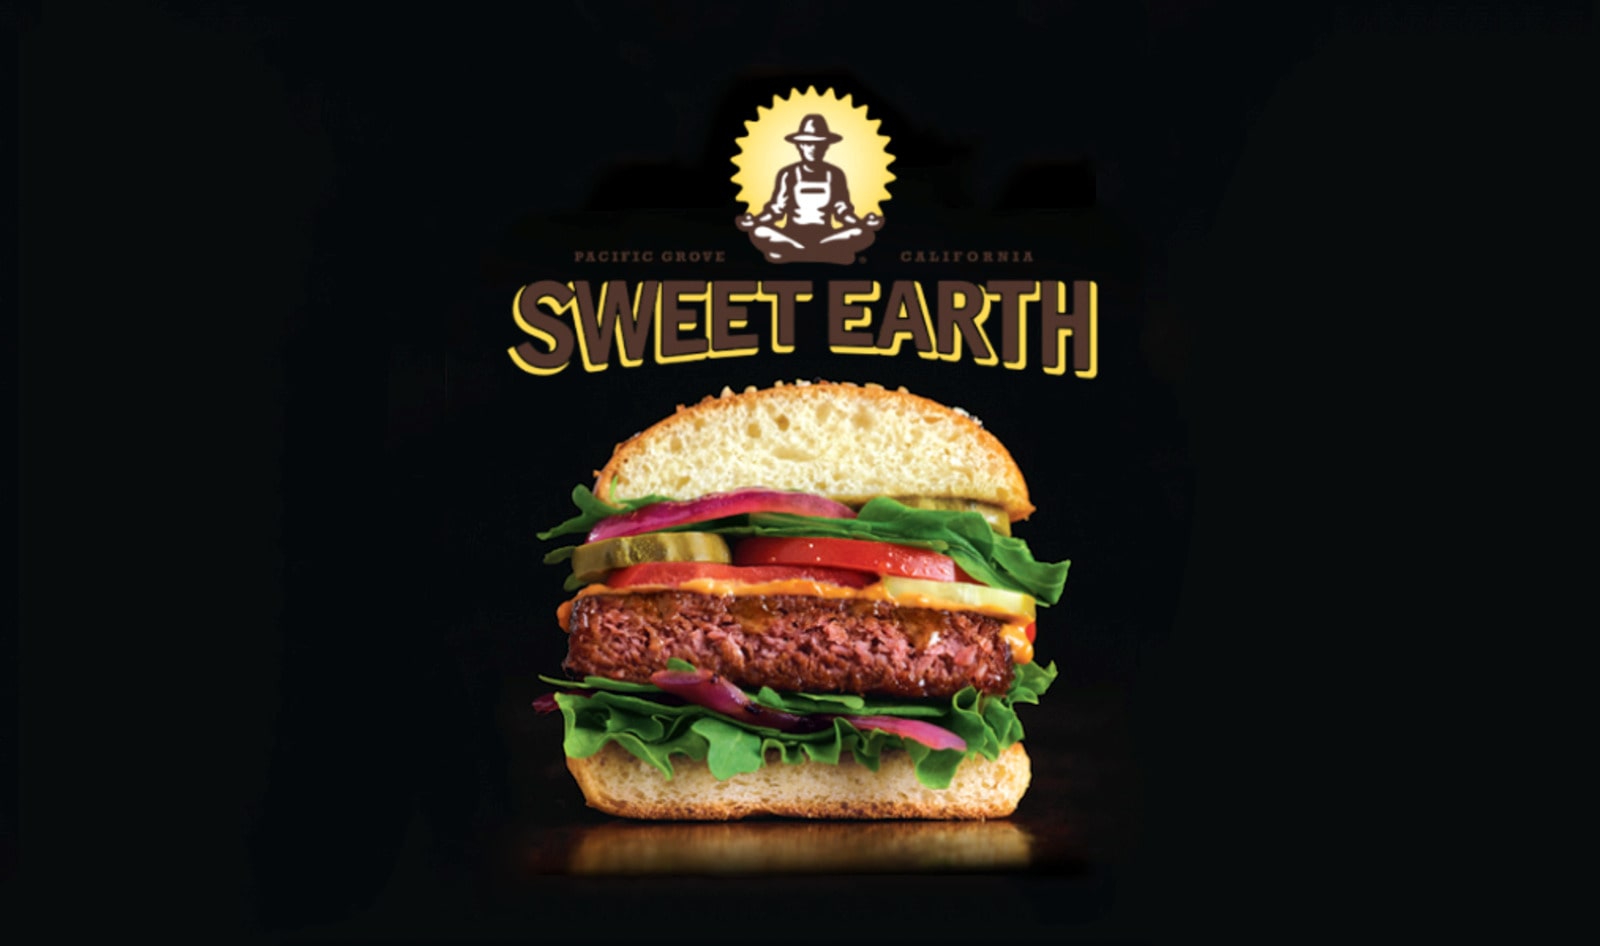 Sweet Earth’s Vegan Burger Hits Stores in September